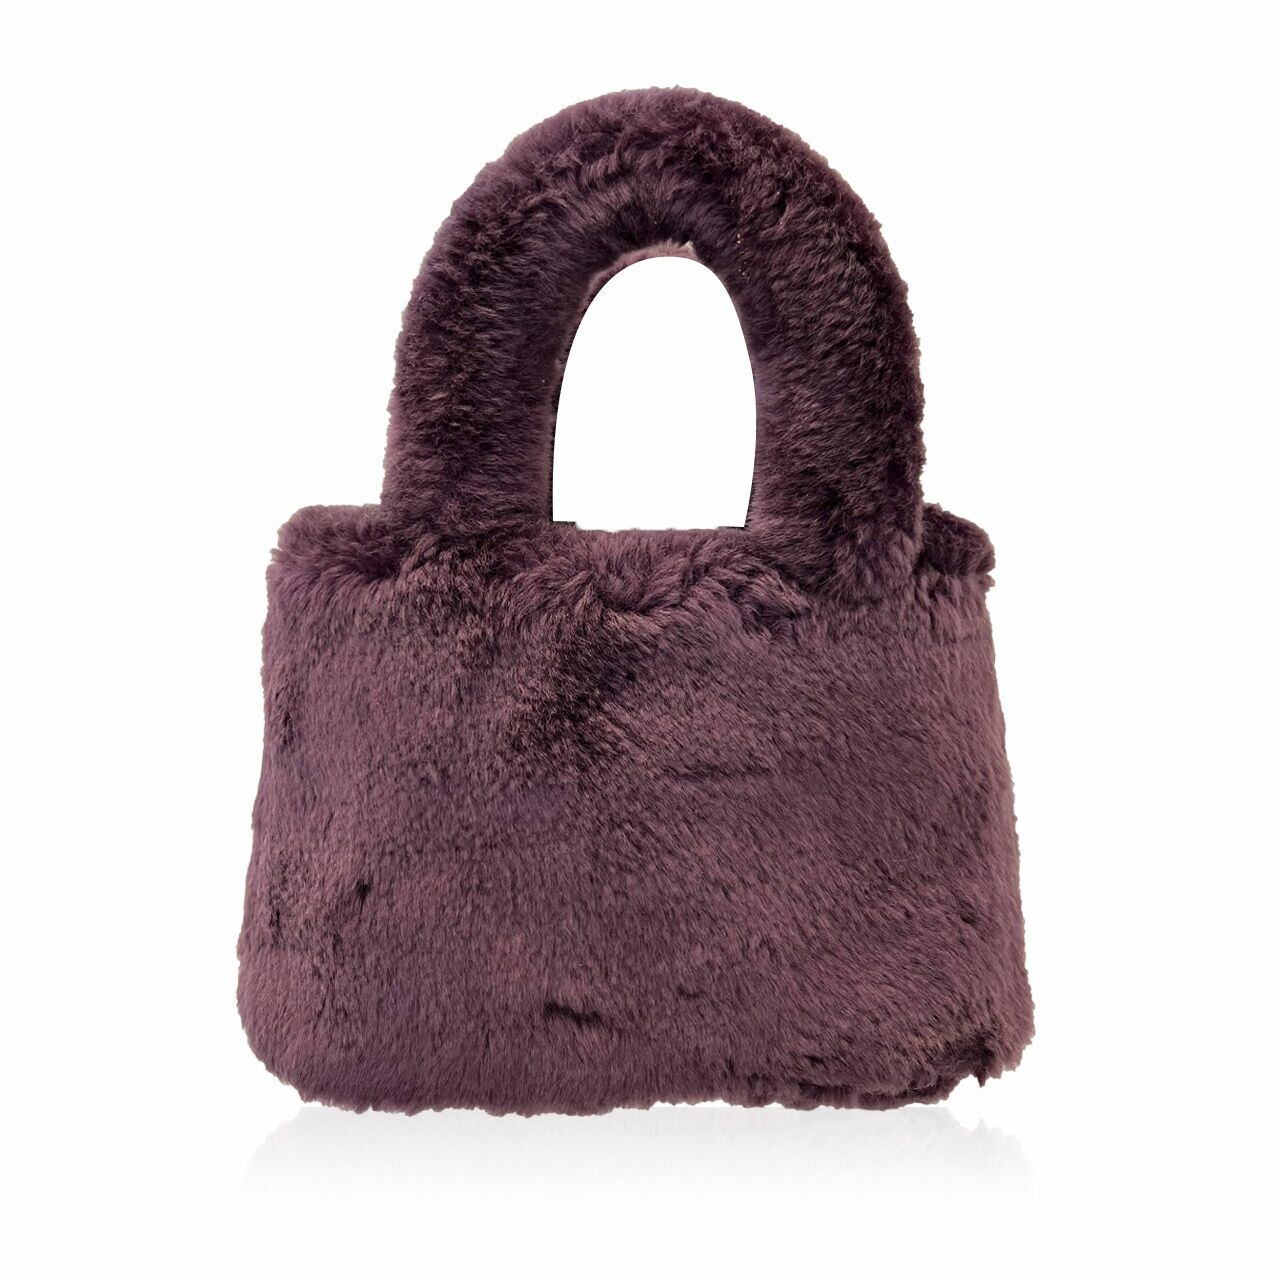 Bling It On Burgundy & Dark Purple Handbag